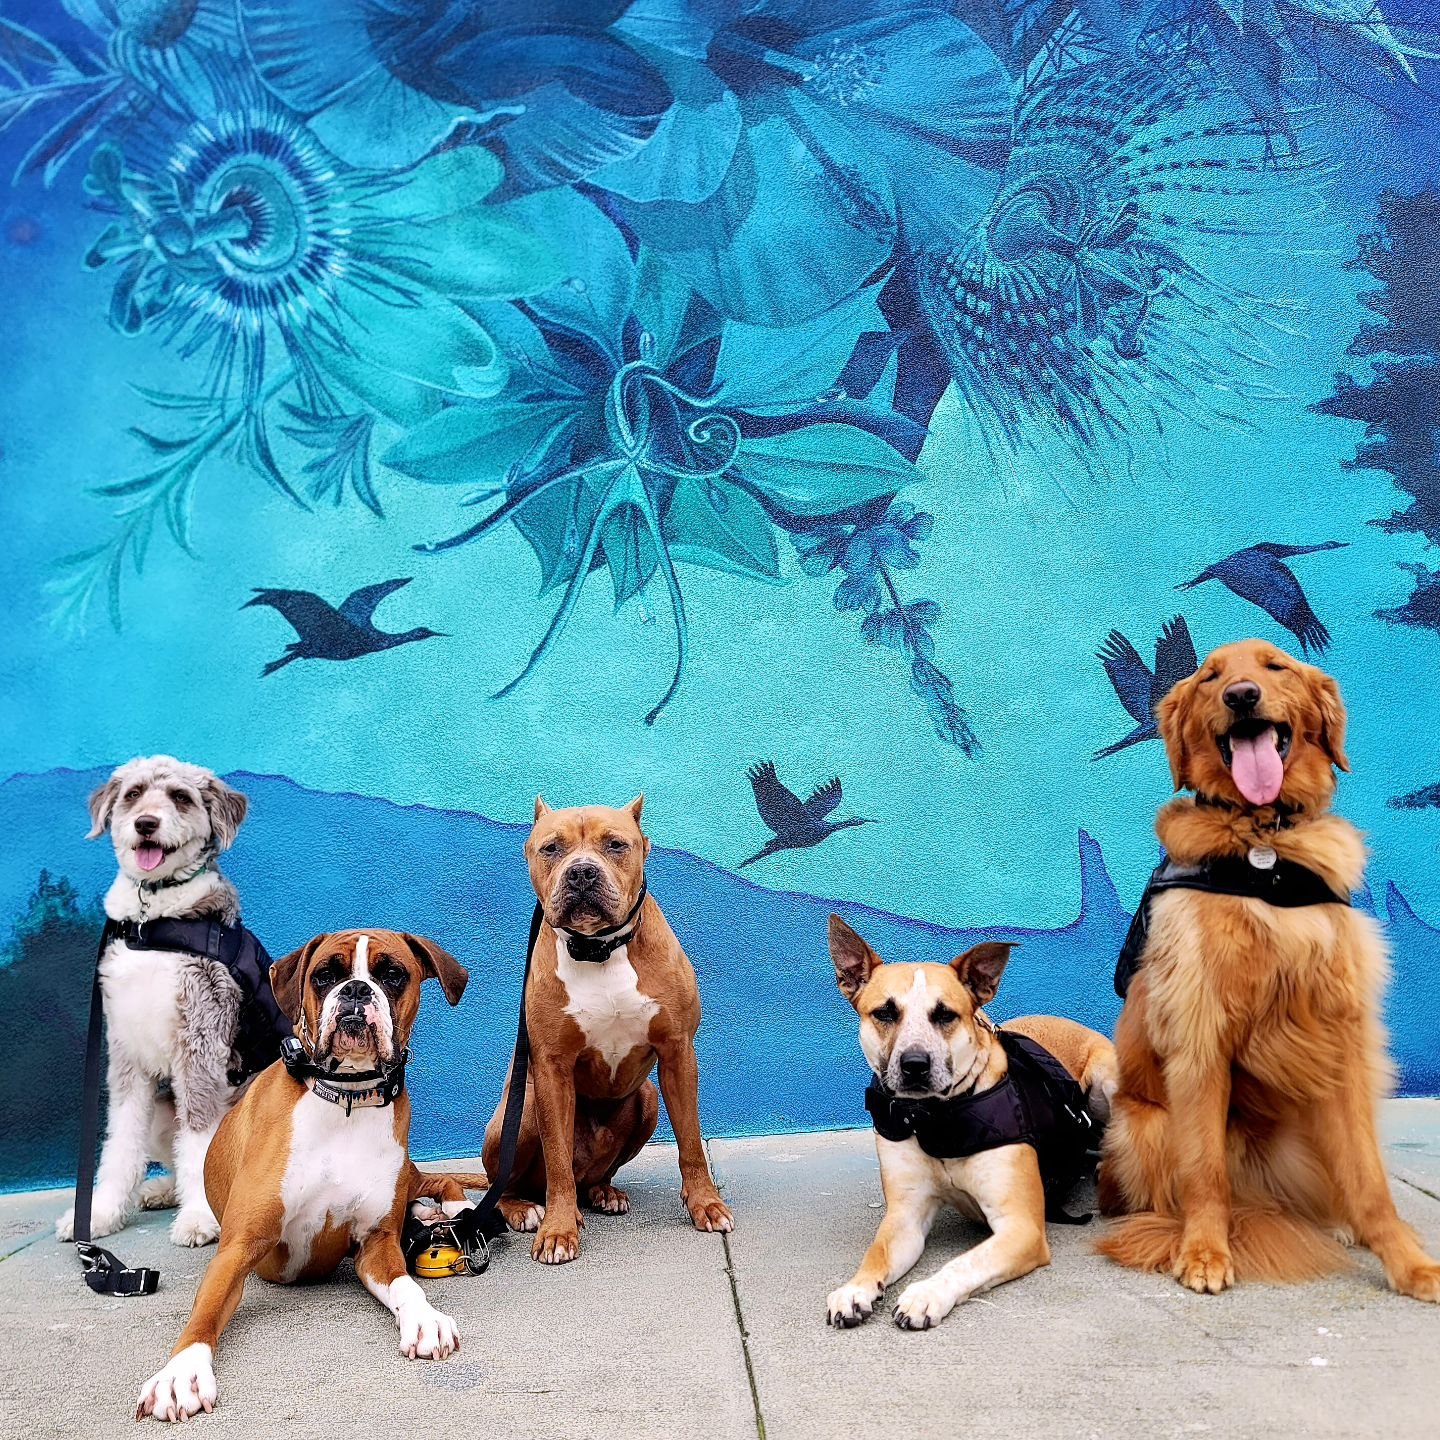 Taking the city by storm 😉🐕

#DogWalking #DogWalkers #DogWalks #DogWalkingLife #DogWalkingCA #OaklandDogs #OaklandDogWalker #OaklandDogWalking #PackLife #DogPack #DogTraining #DogTrainers #OaklandDogTrainer #CaliforniaDogs #DogsOfInstagram #InstaDo